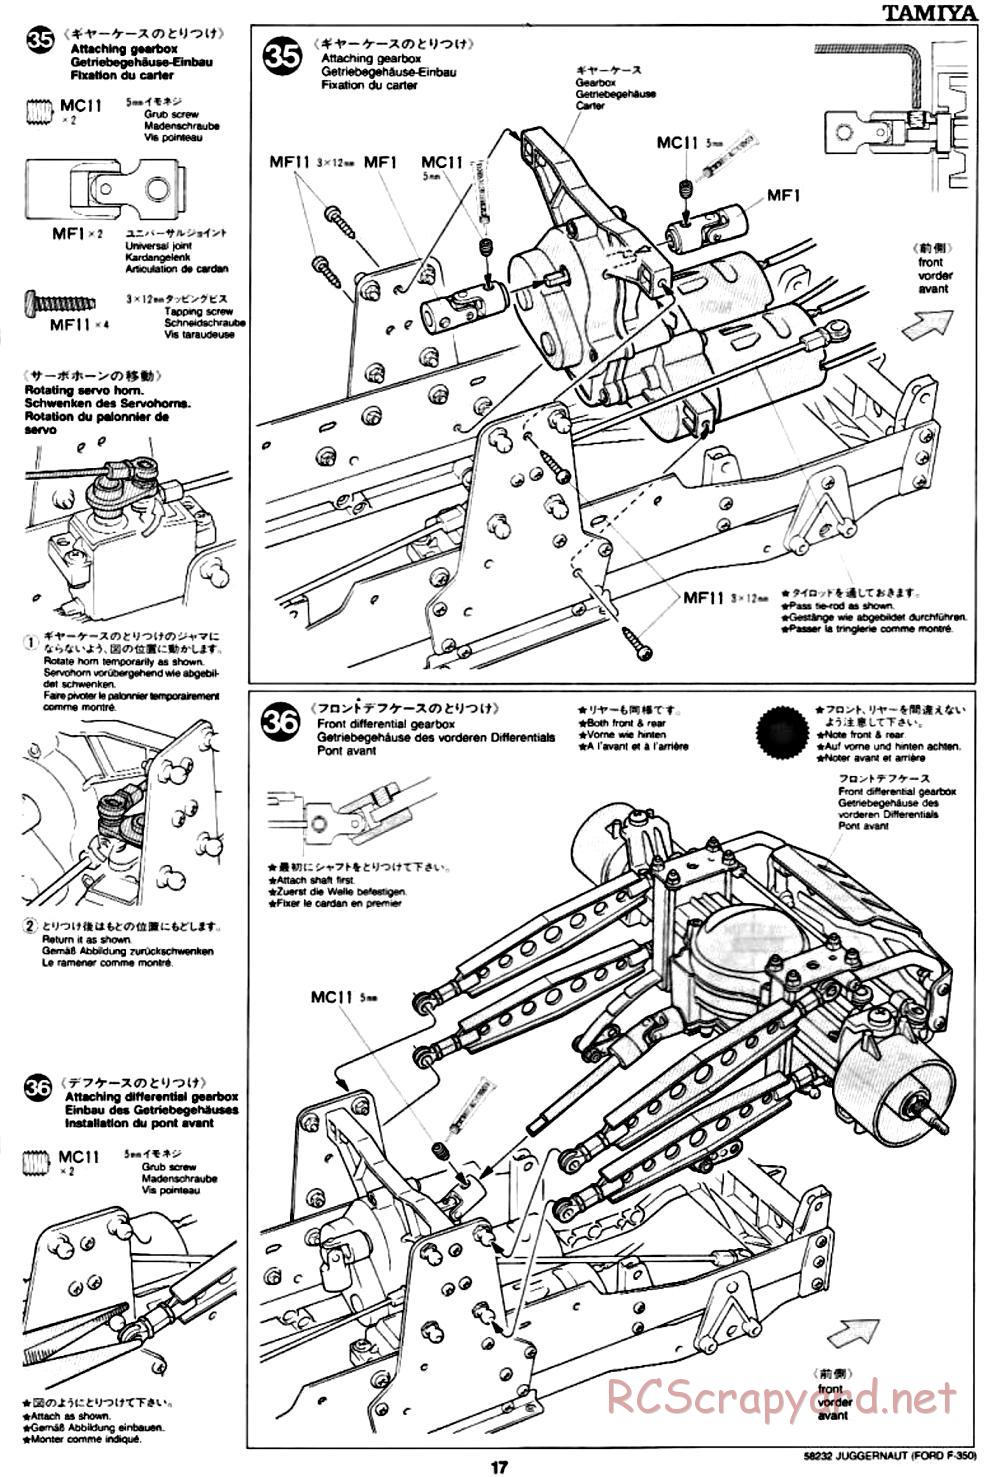 Tamiya - Juggernaut Chassis - Manual - Page 17